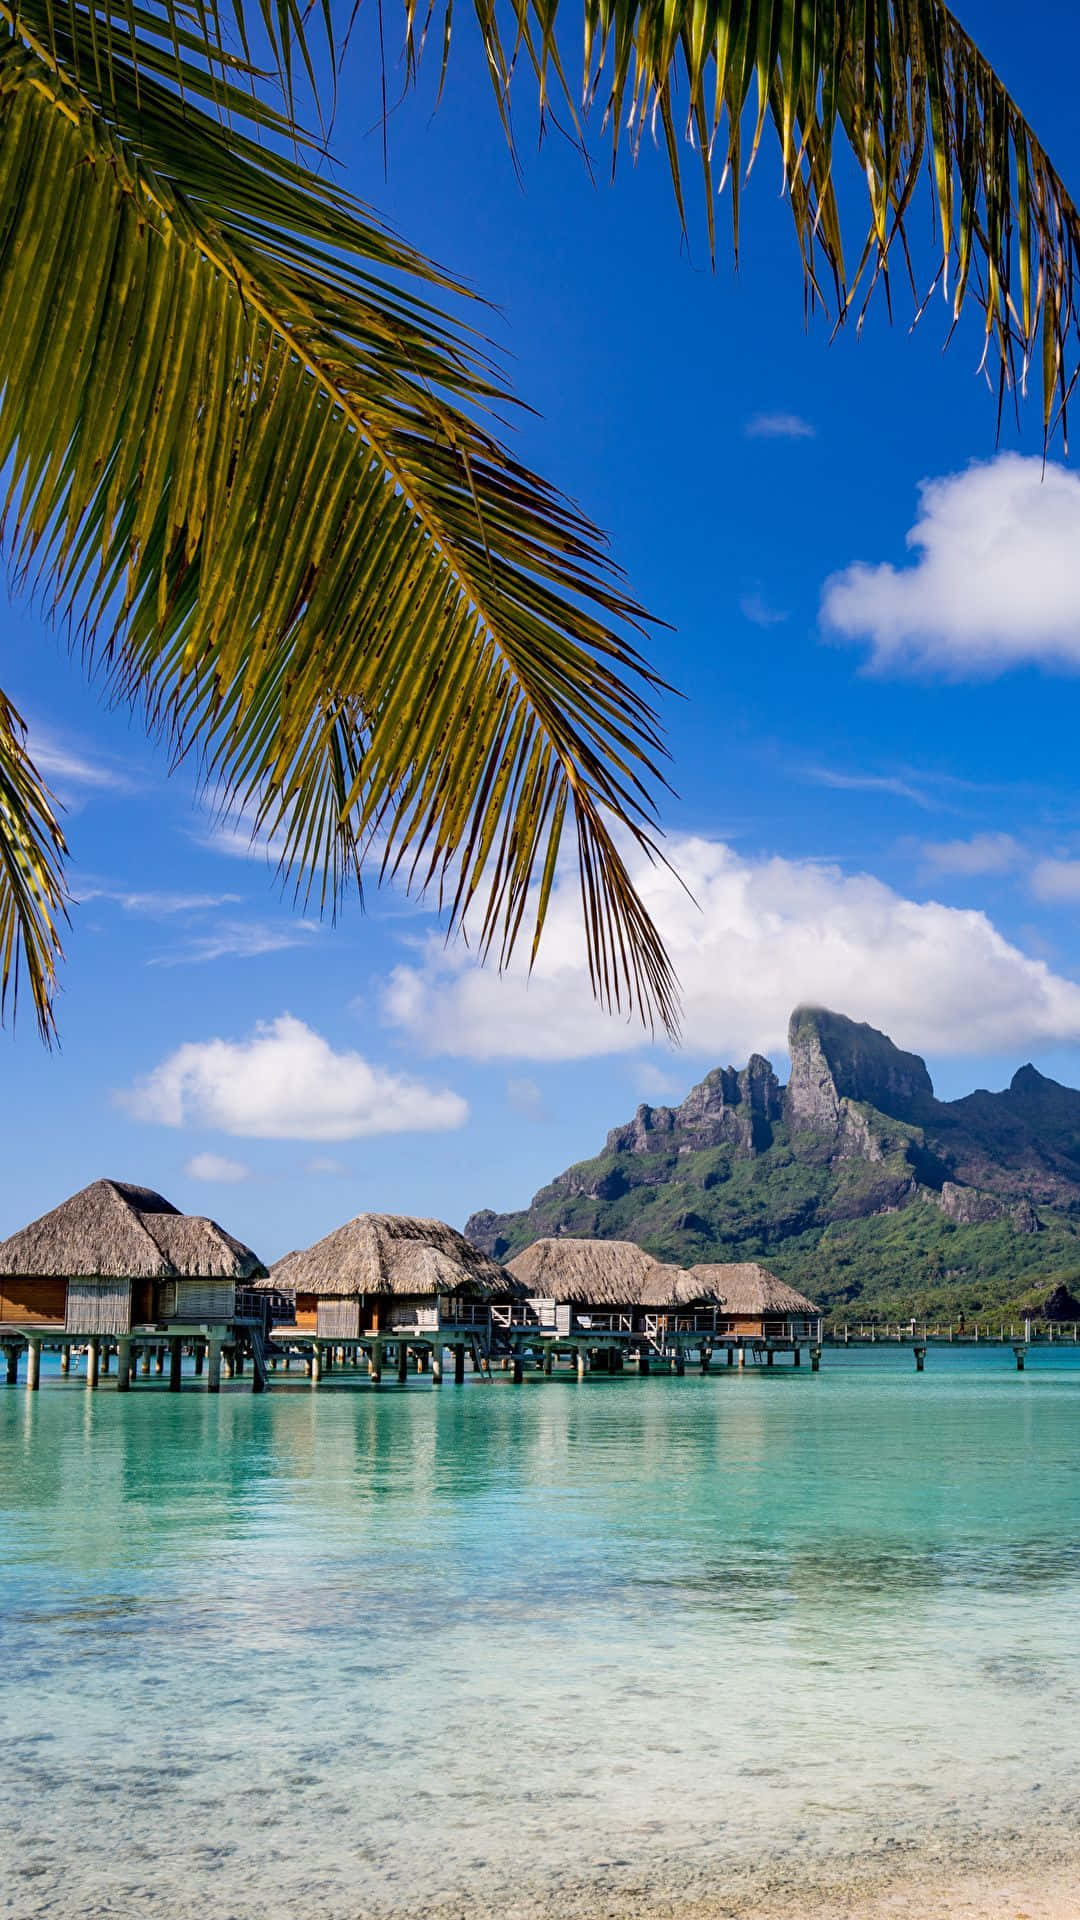 Lounge in luxury on the stunning shores of Bora Bora. Wallpaper